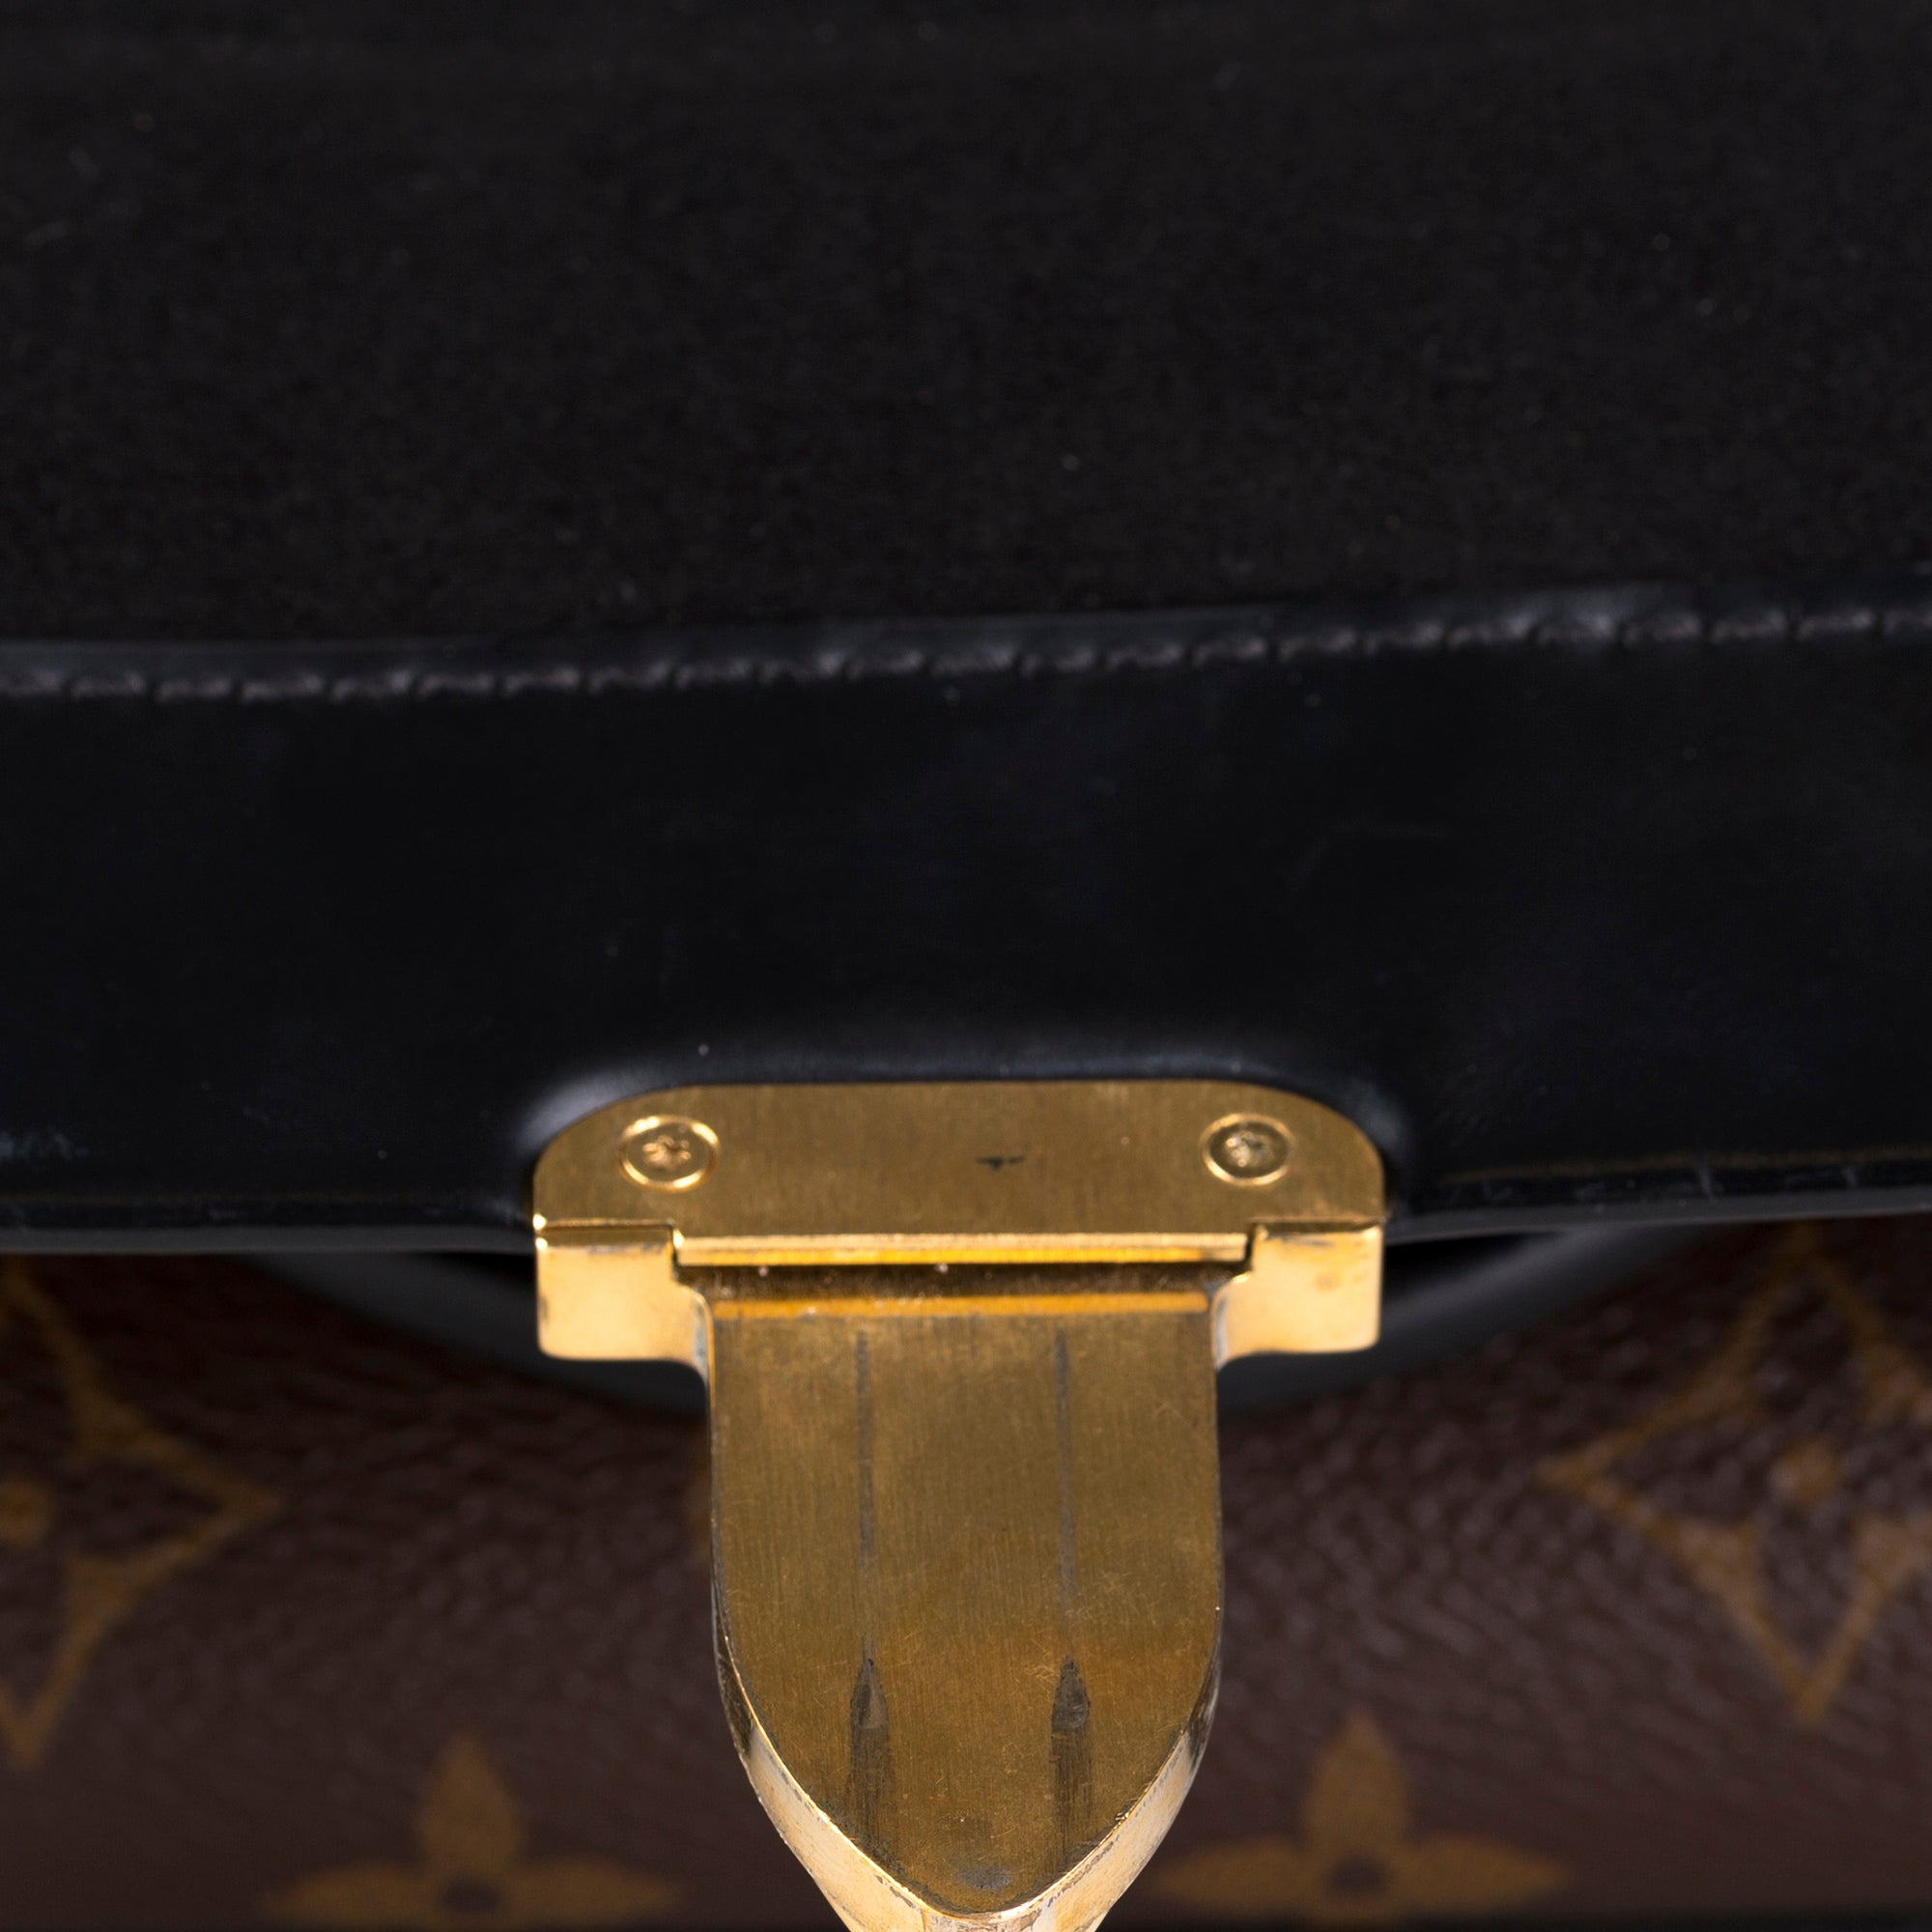 Tas Louis Vuitton SP2158 One Handle Flap Crossbody Bag Brown